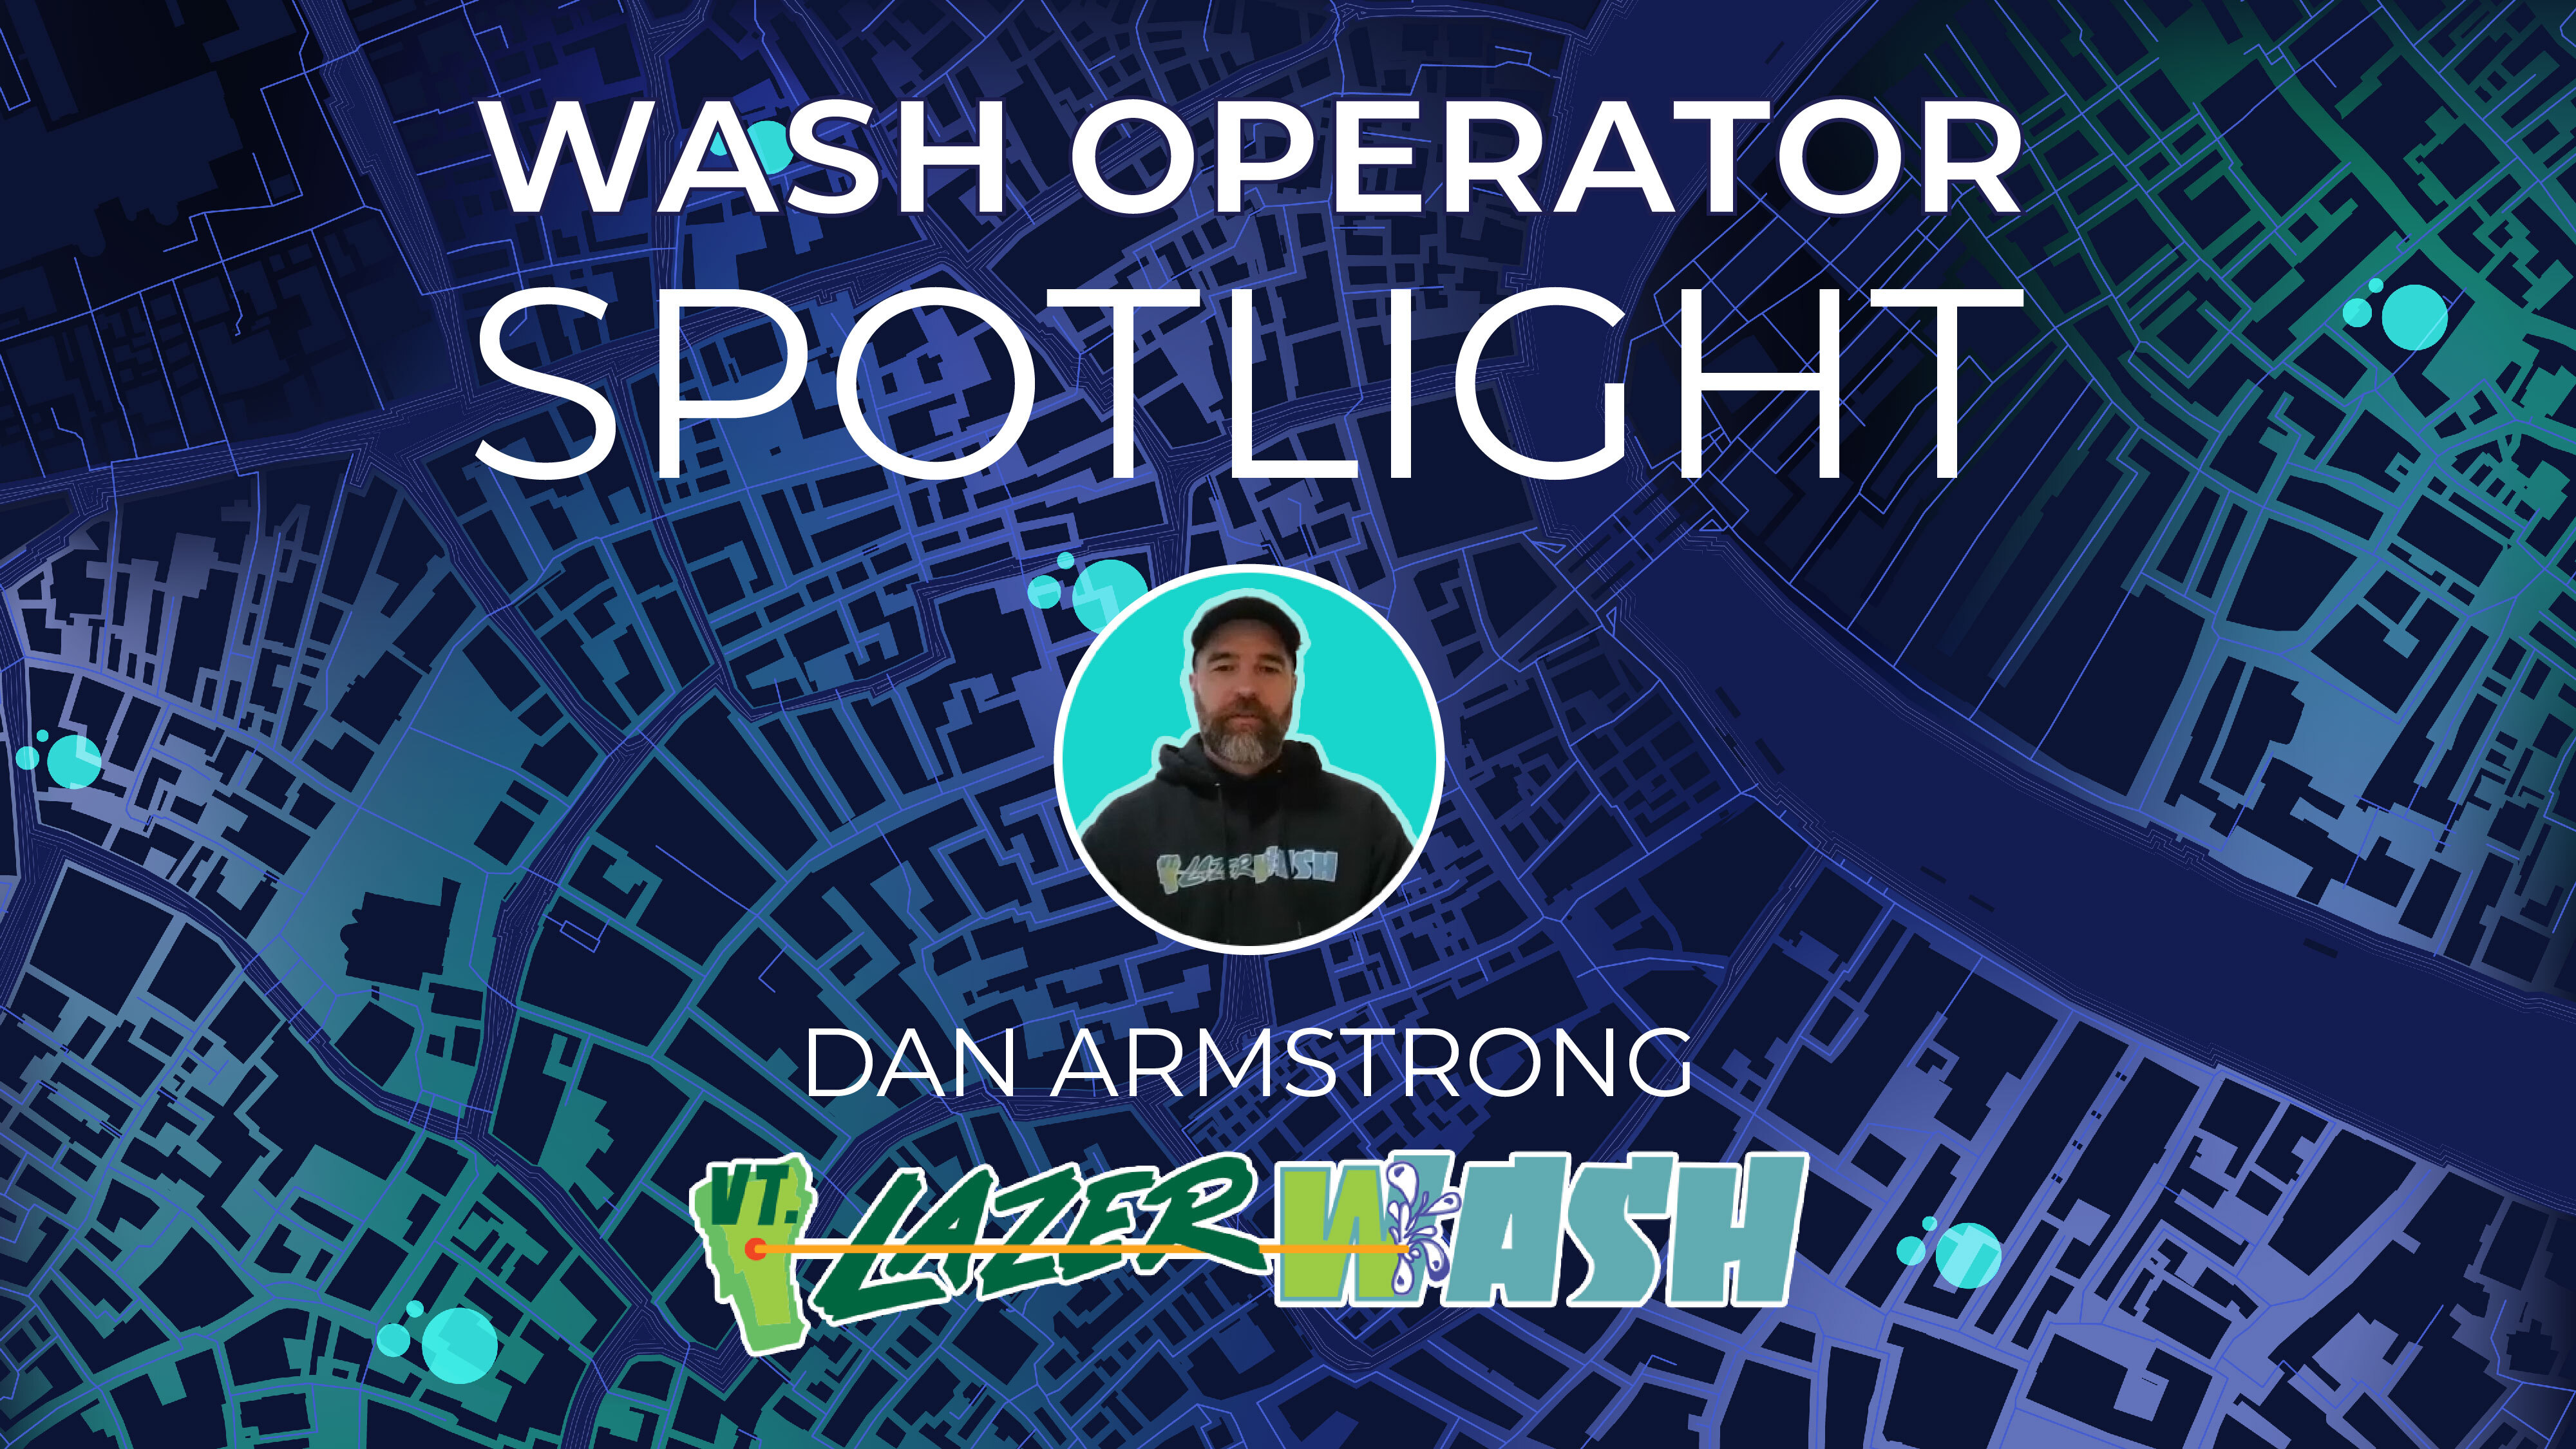 Dan Armstrong, Vermont Lazerwash, Wash Operator Spotlight